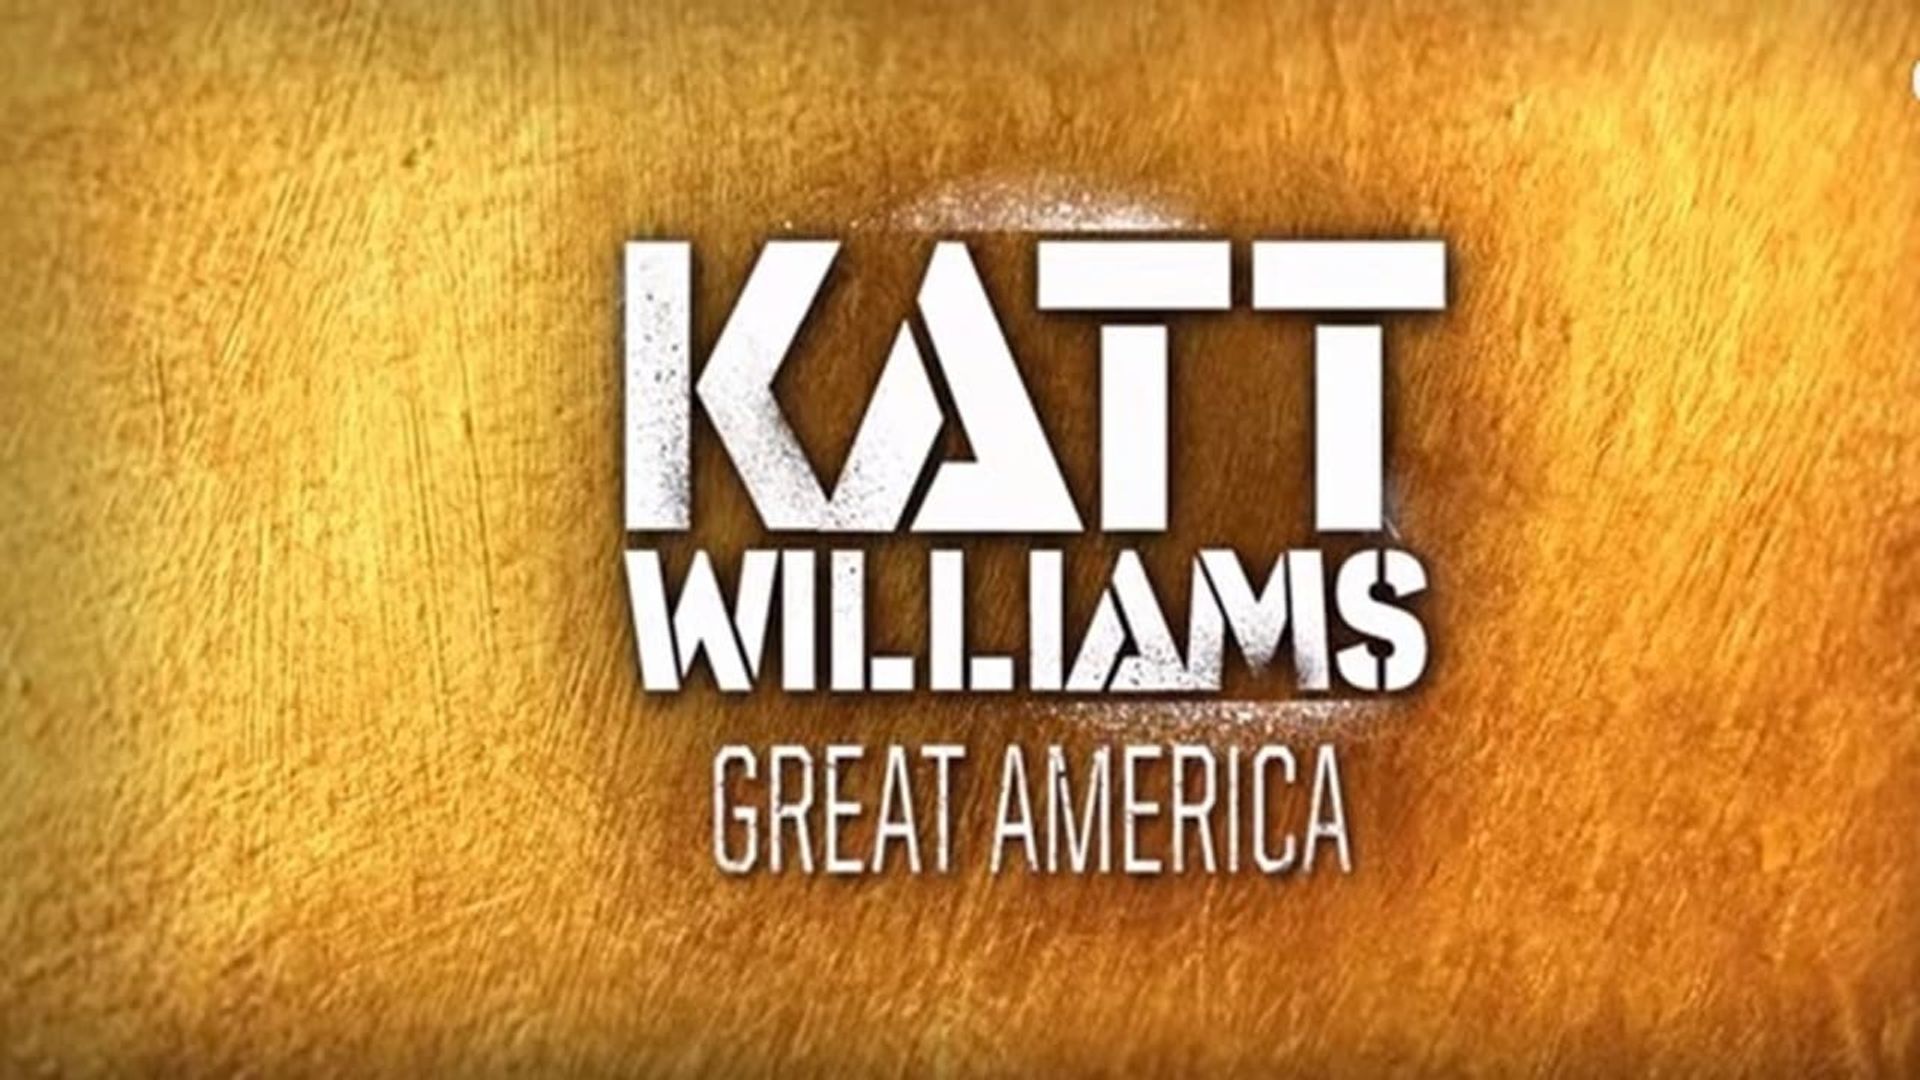 Katt Williams: Great America background